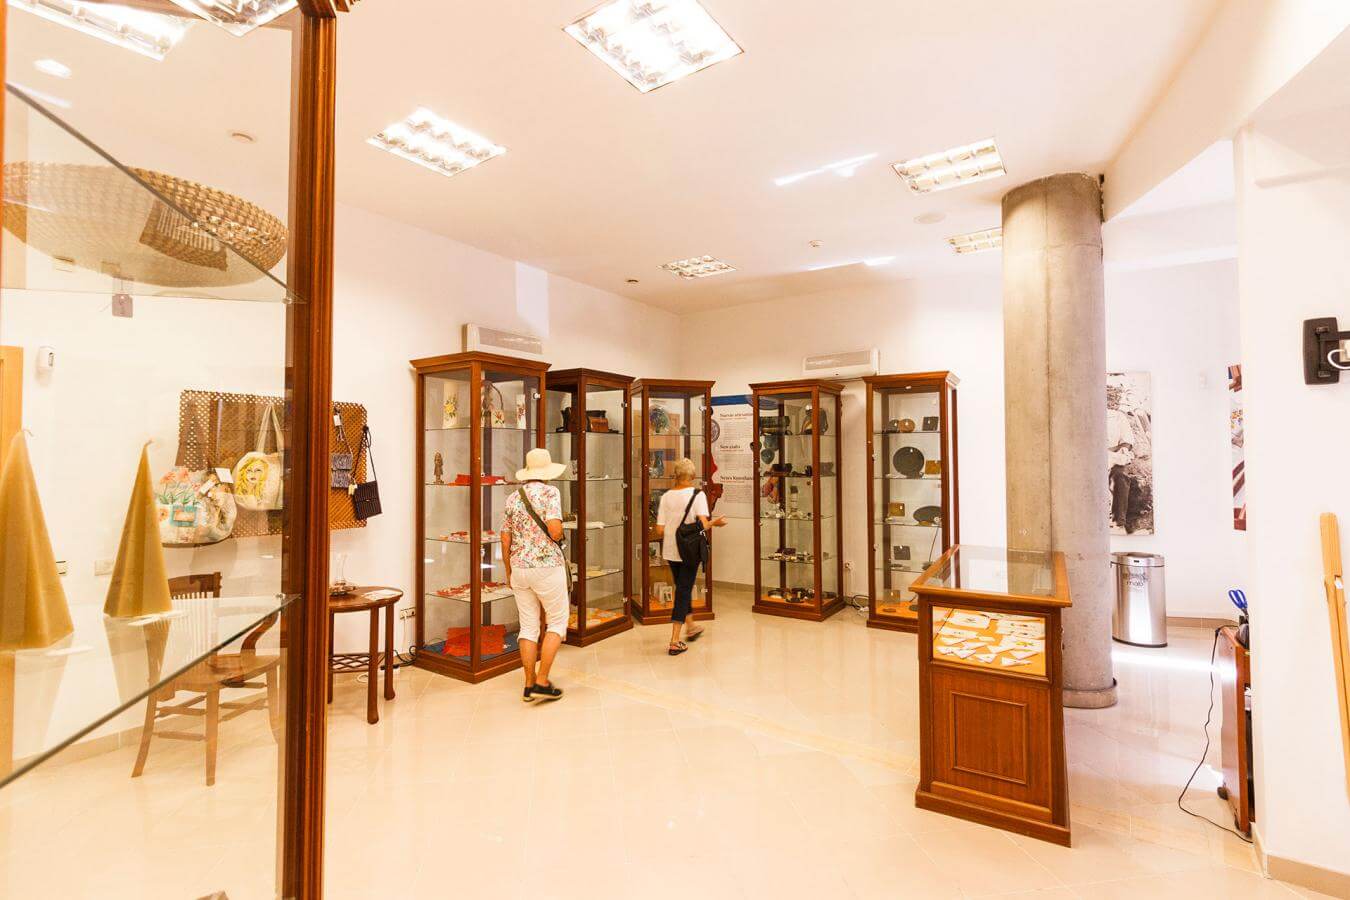 La Palma - Museo Benahorta